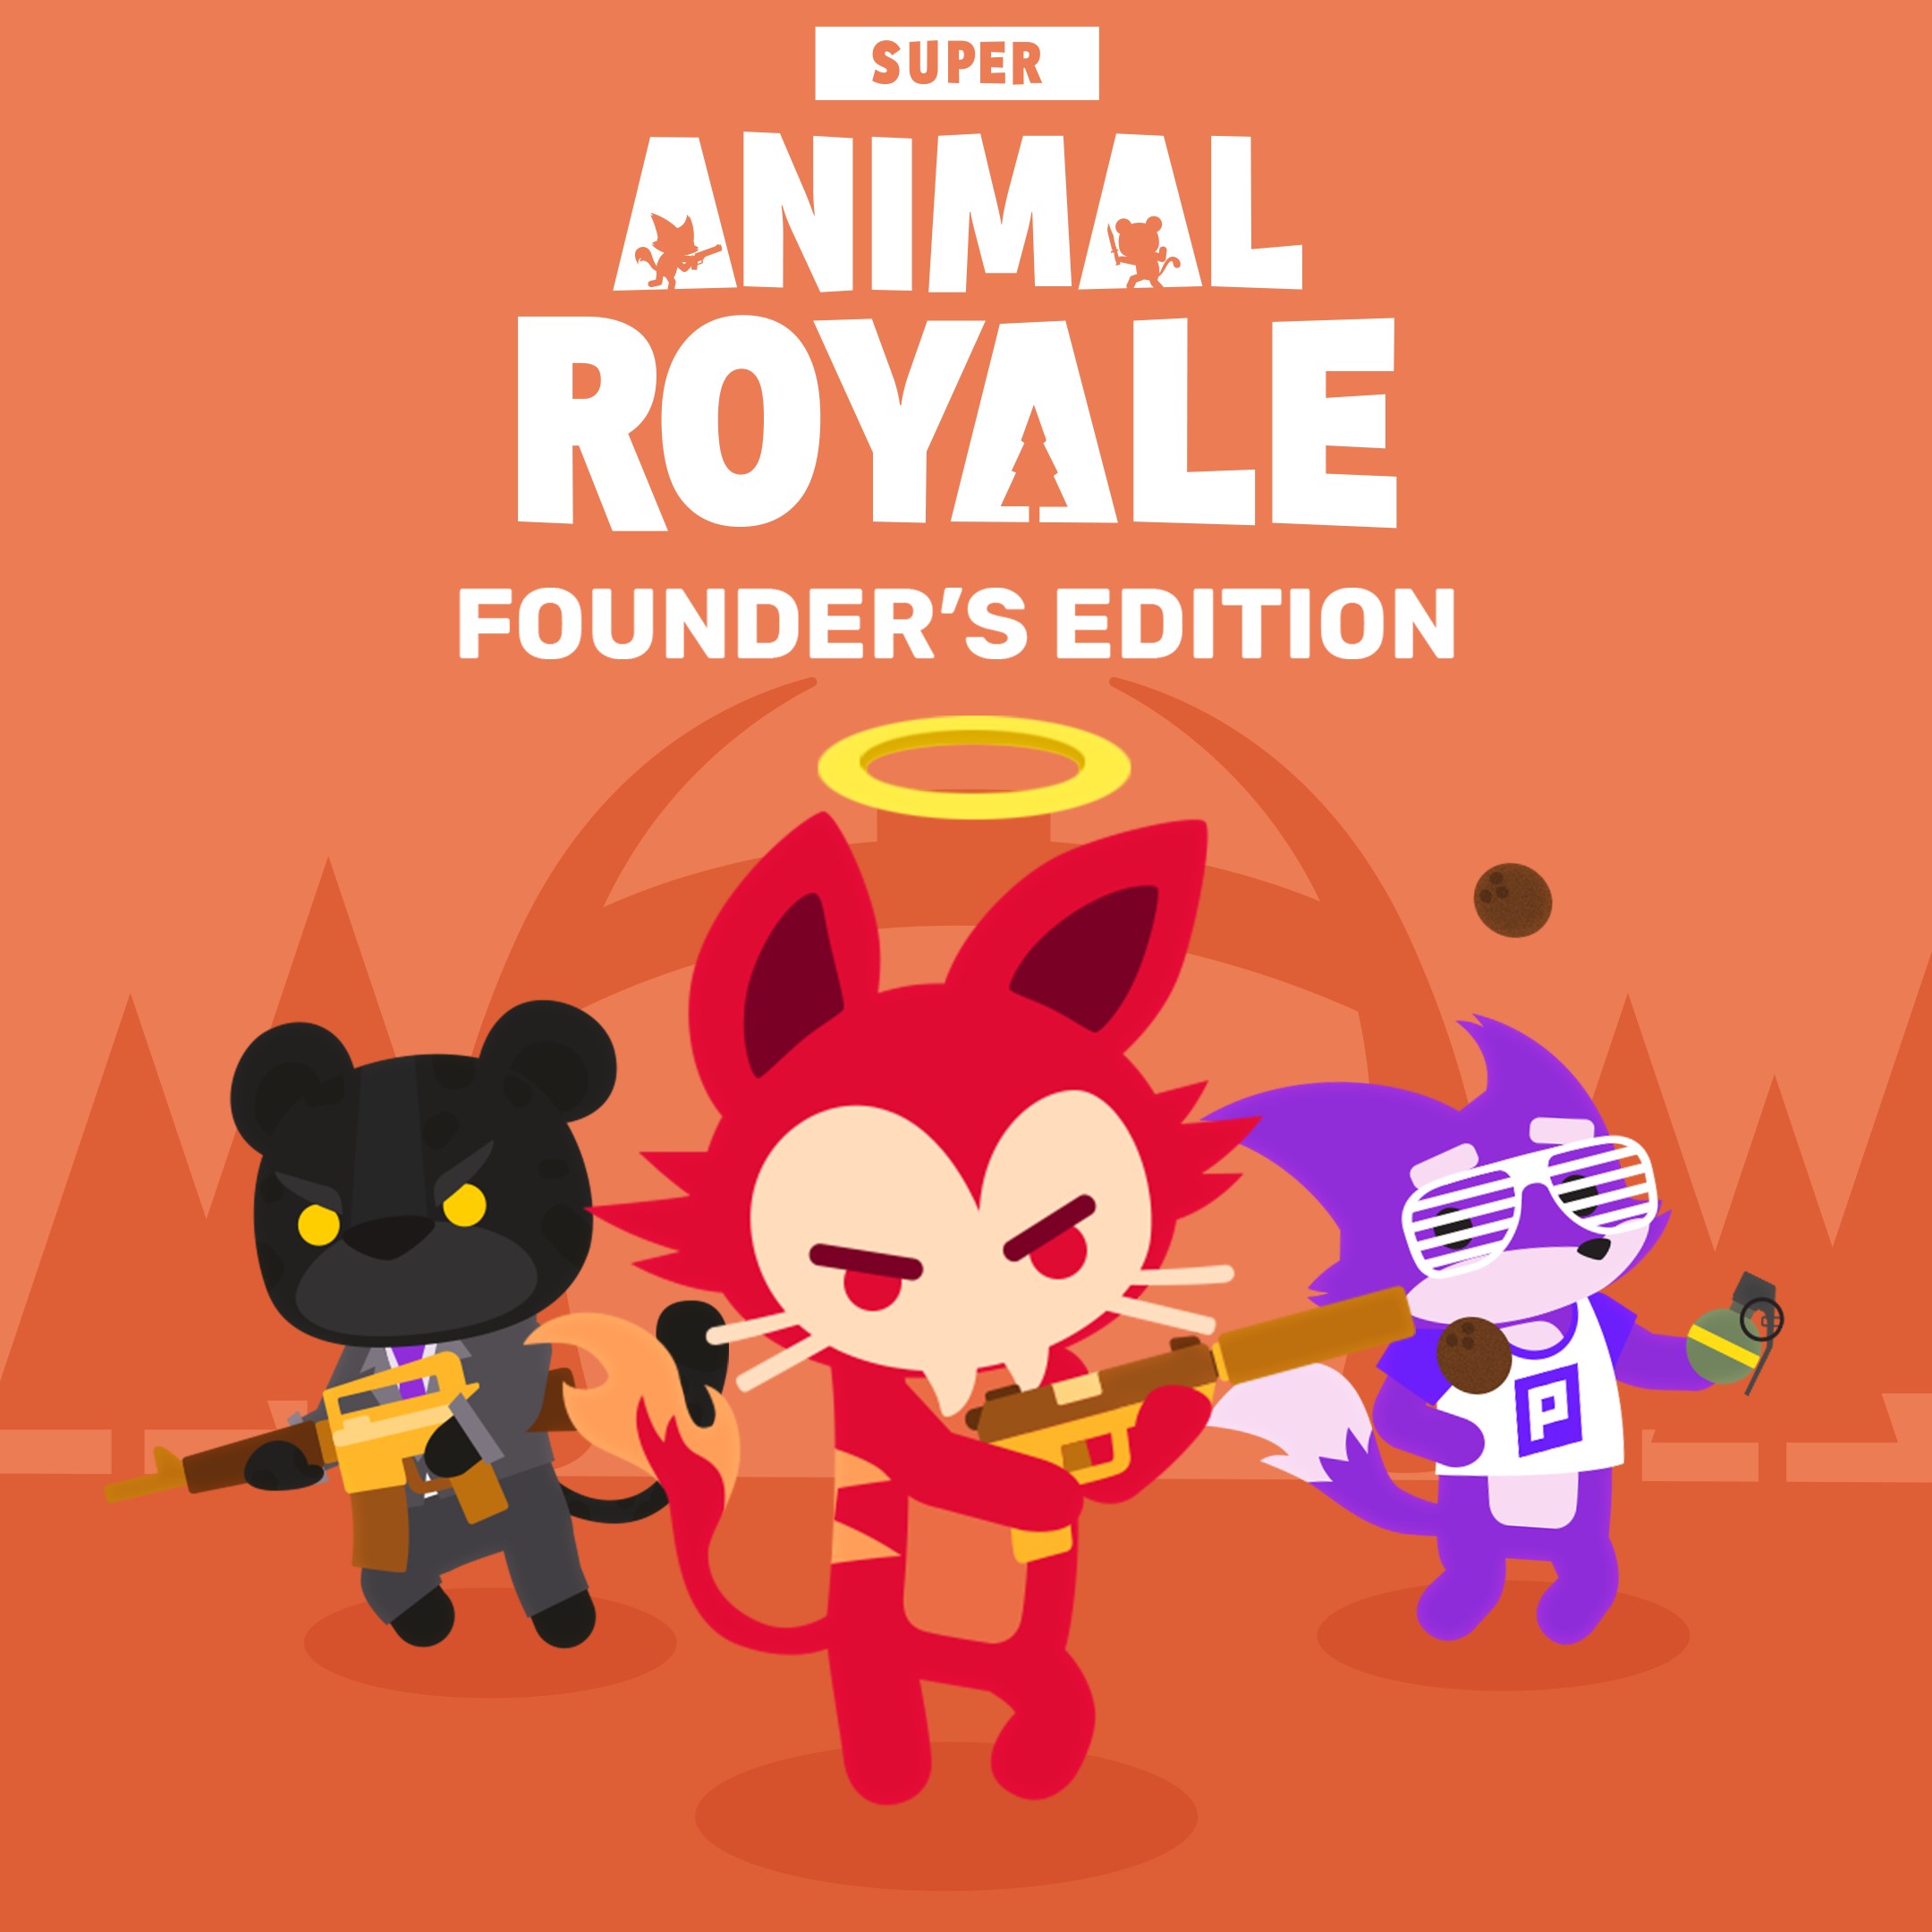 Founder's Edition DLC